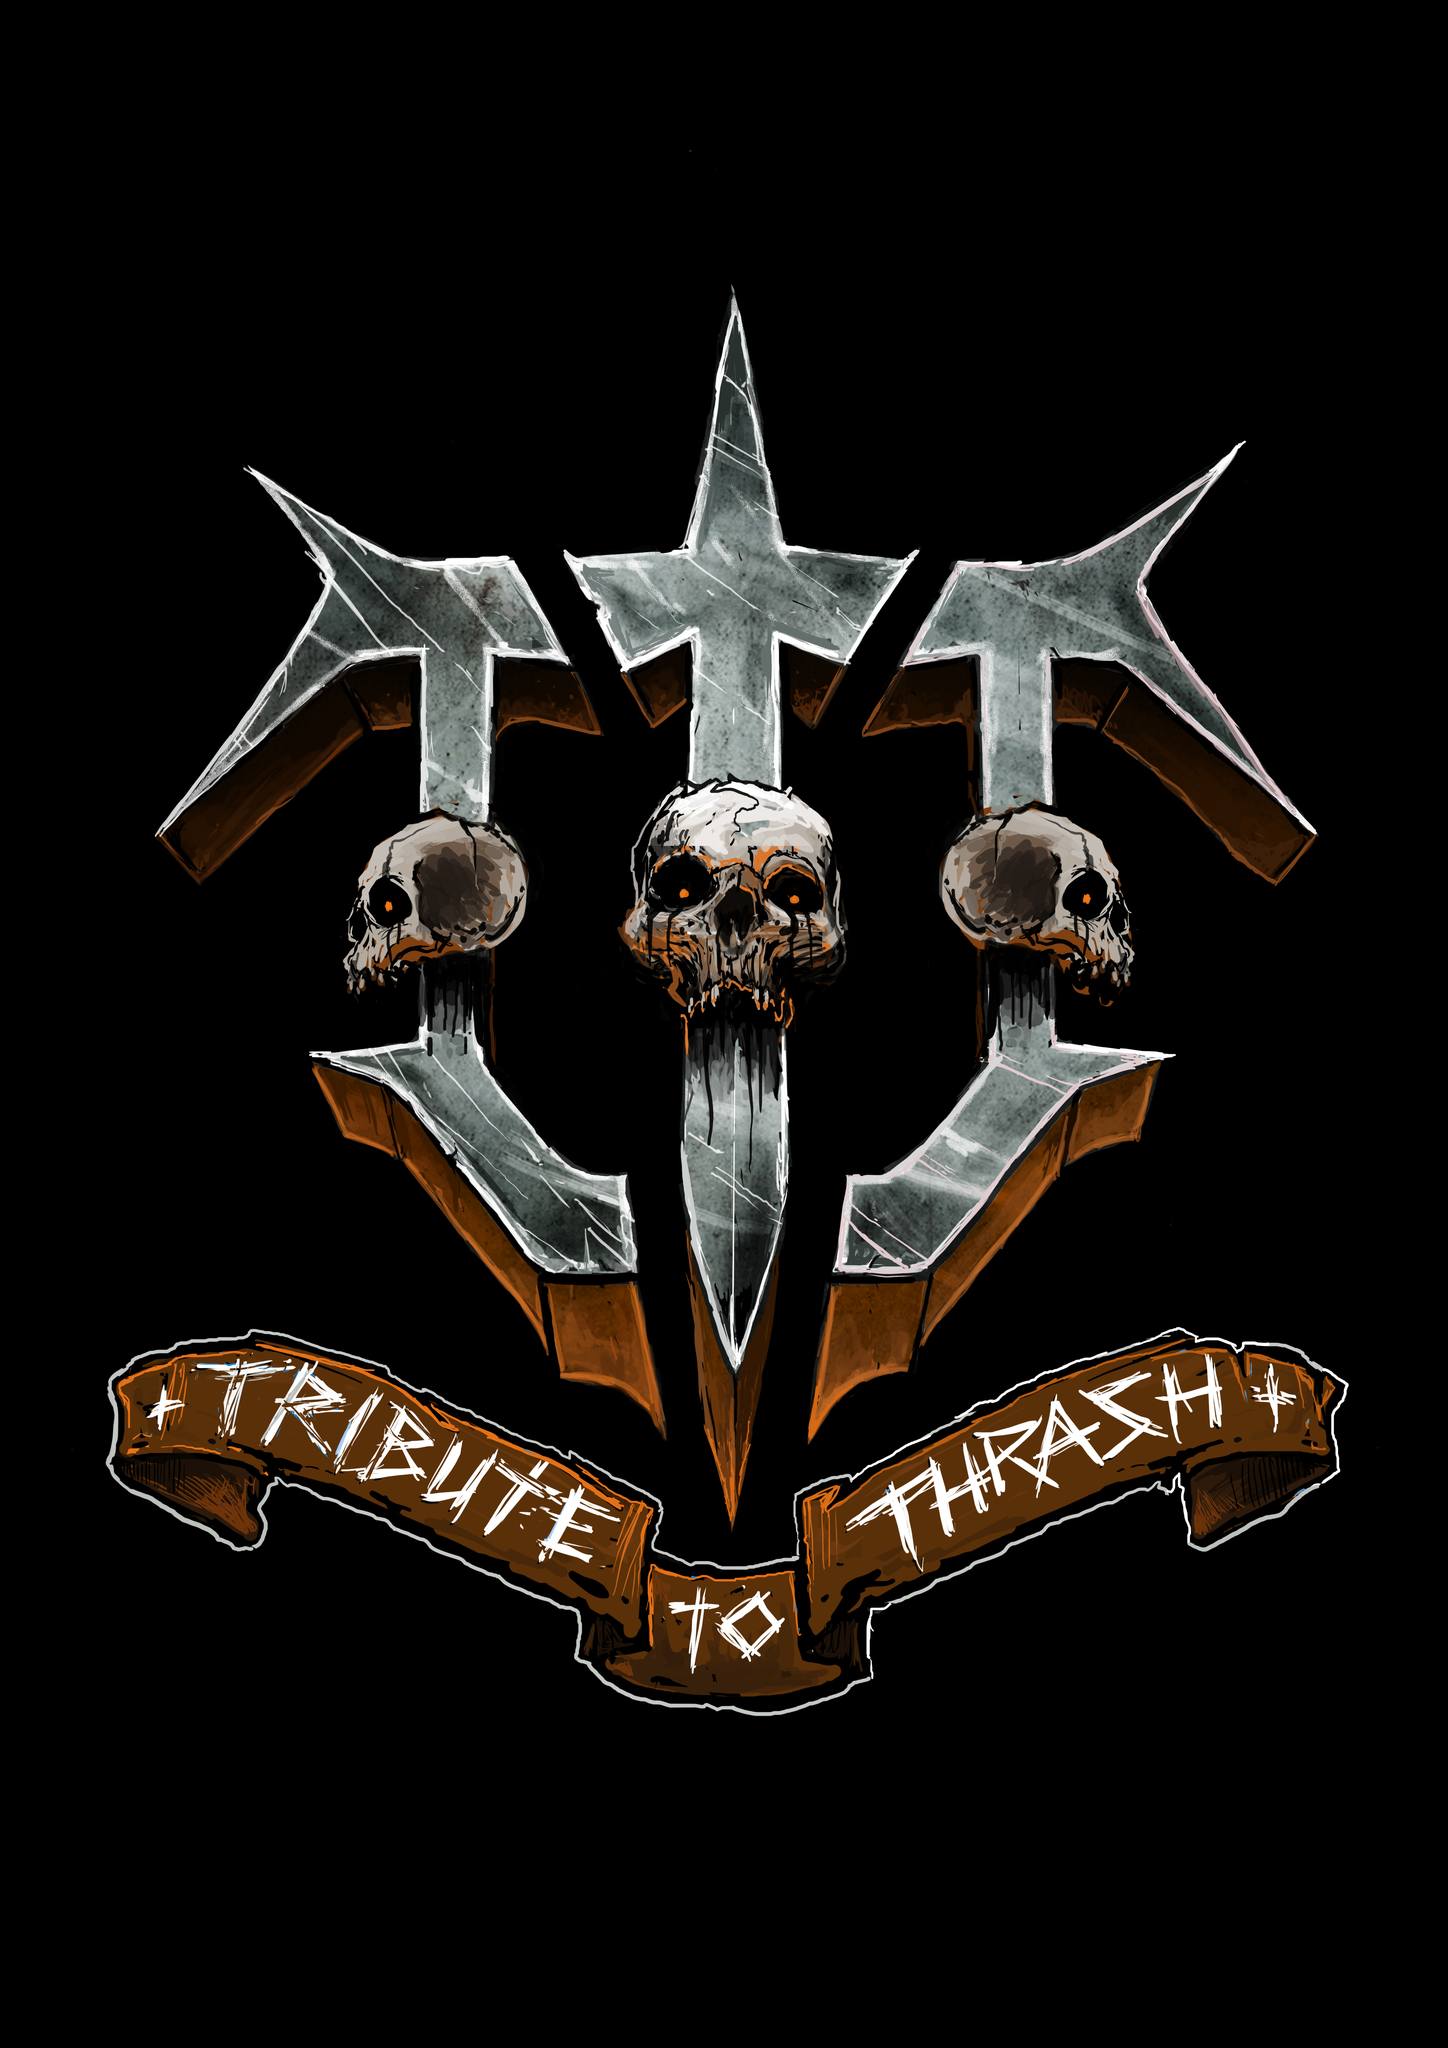 TTT - Tribute To Thrash